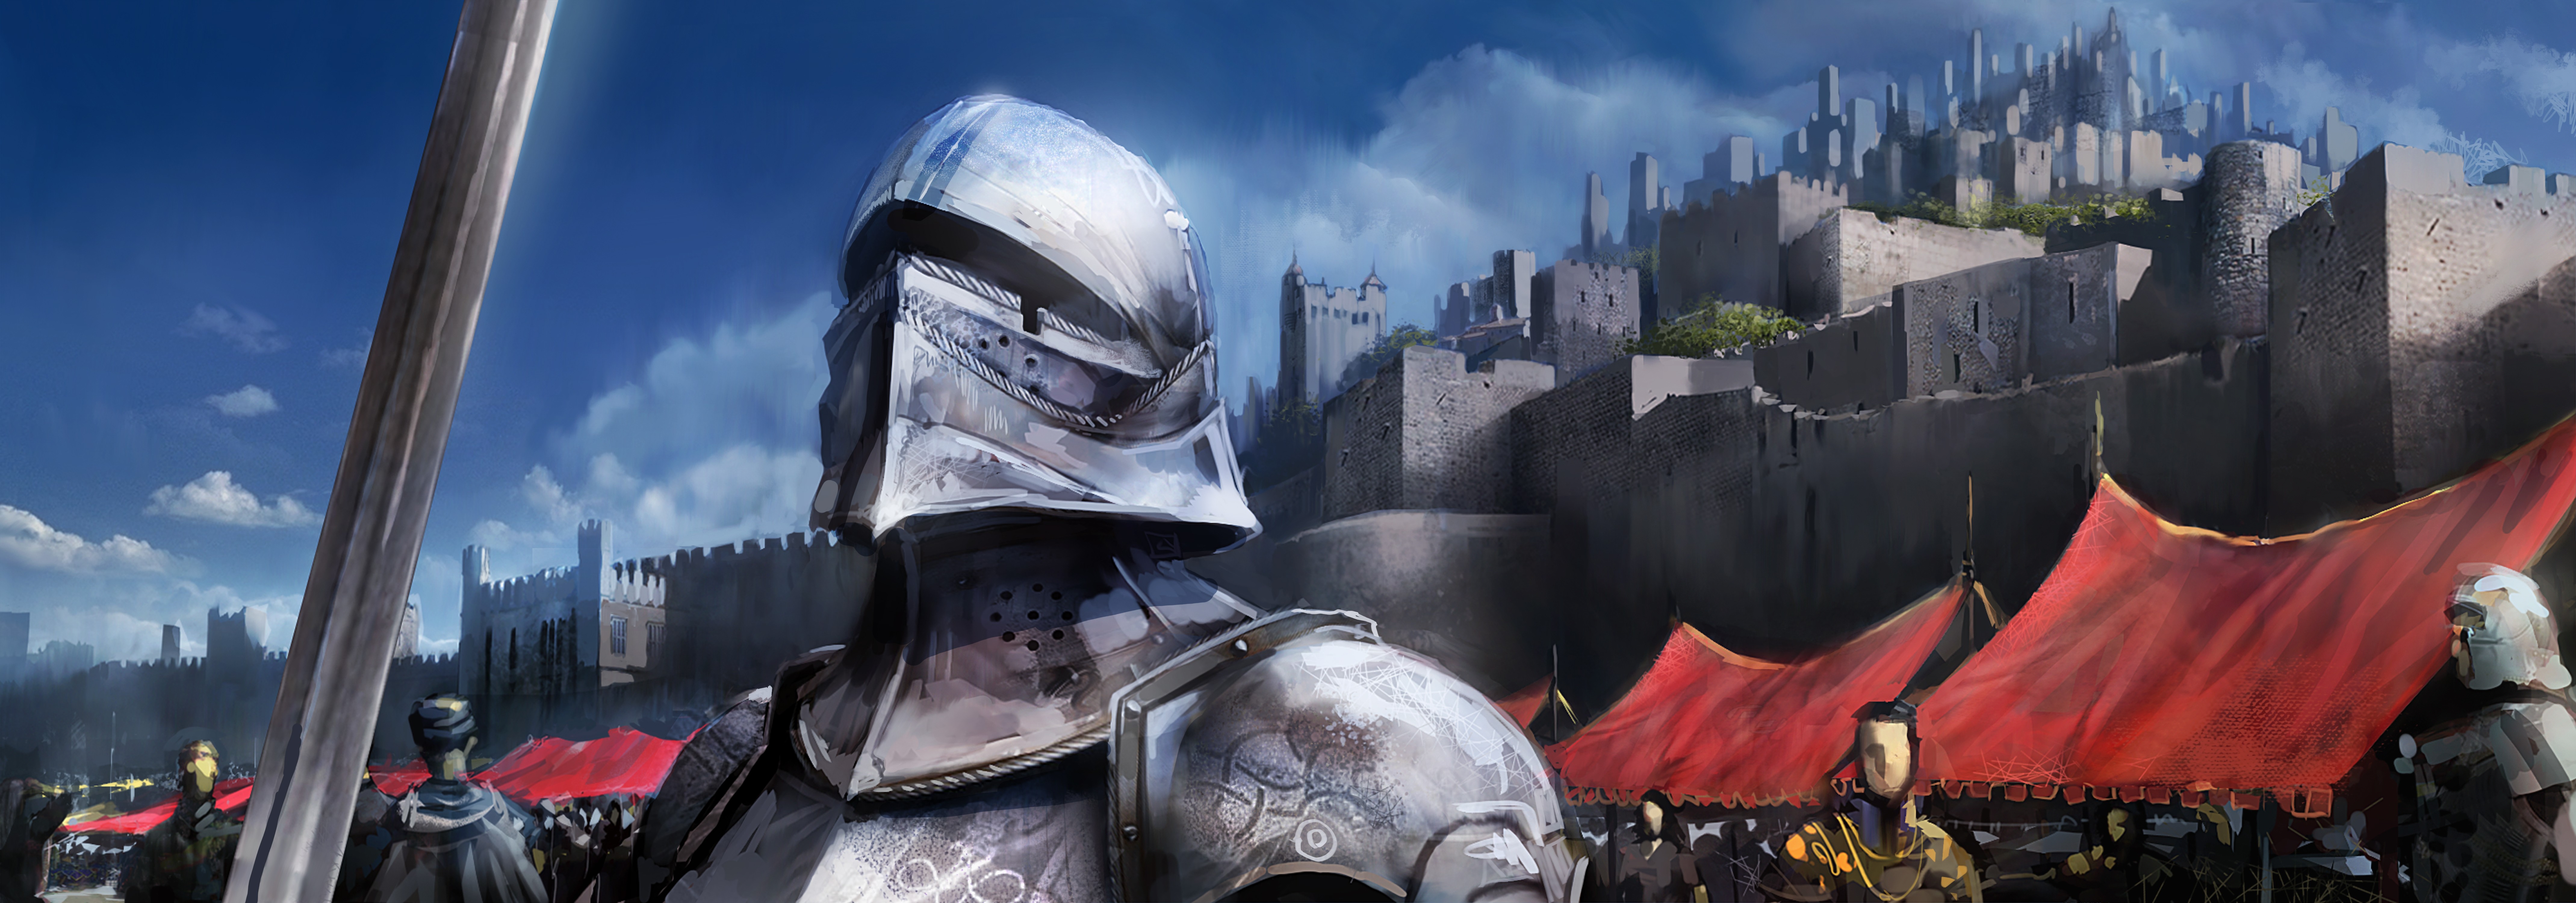 Anime 8558x3000 knight castle guards armor medieval silver shiny fantasy armor fantasy art